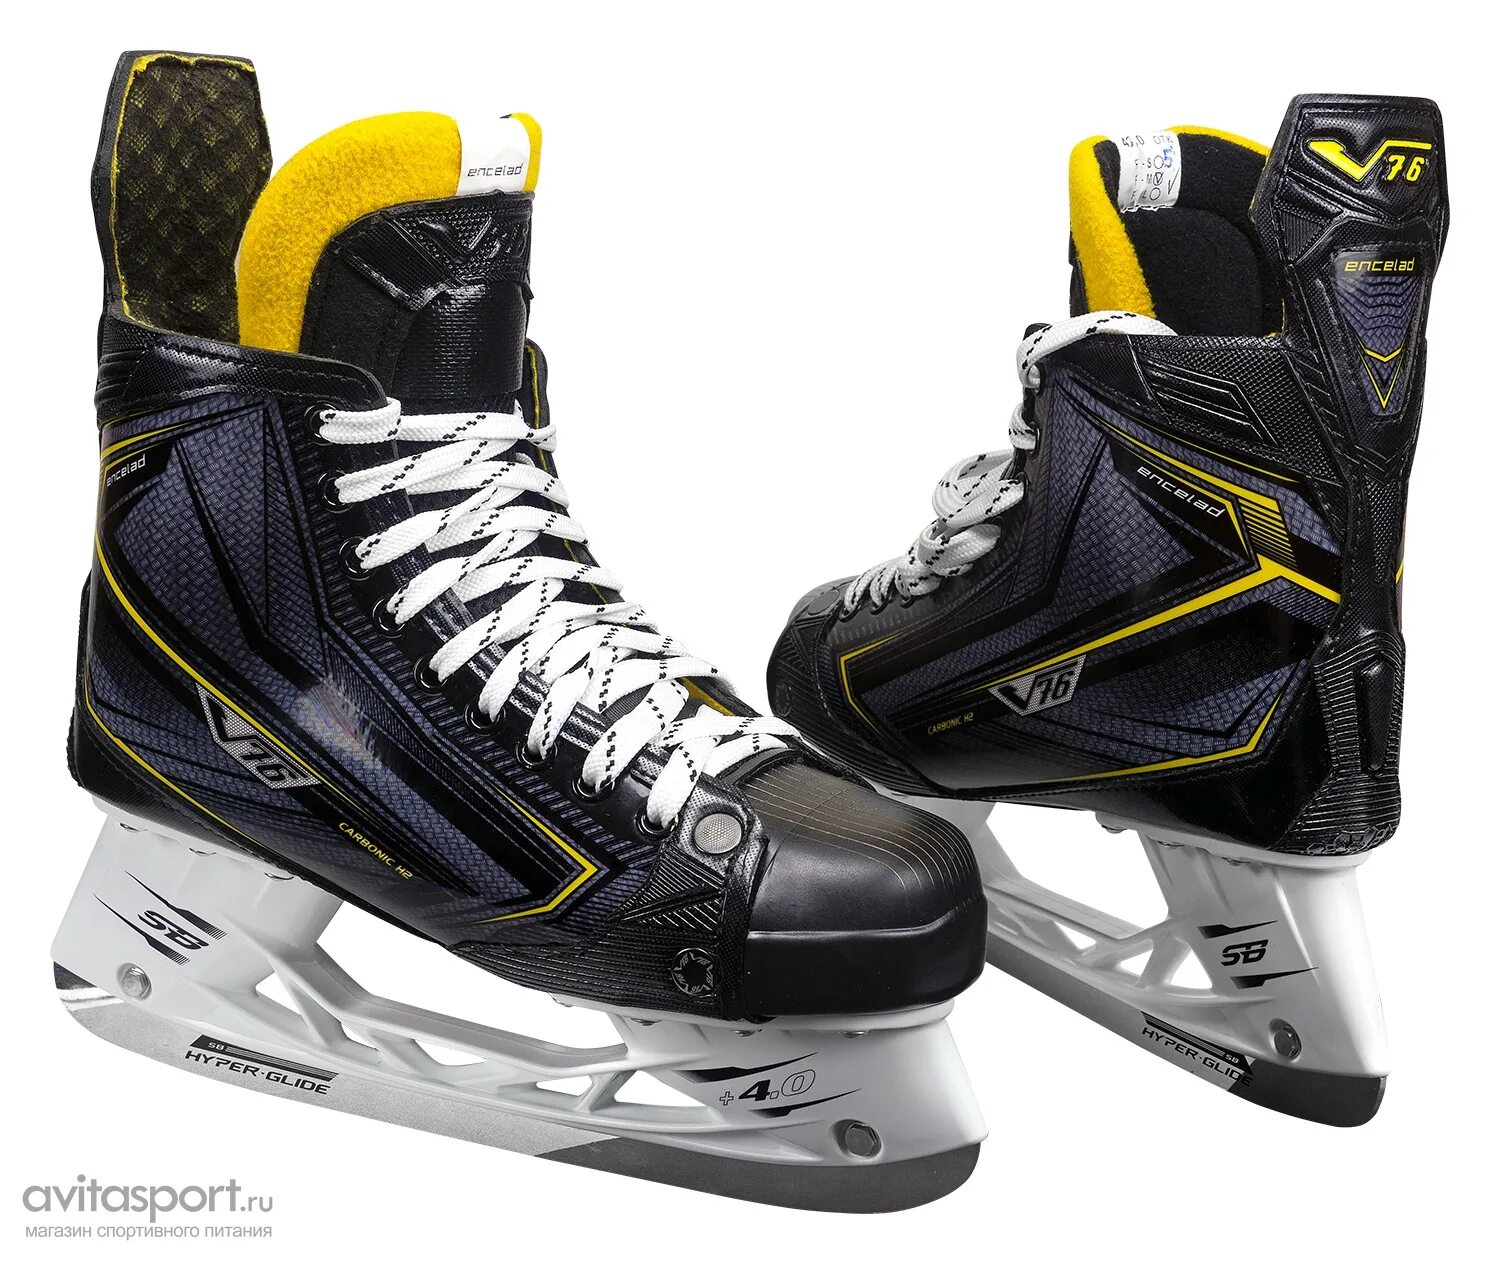 Коньки v76 encelad. Коньки хоккейные v76 Pro. Коньки хоккейные v76 модель encelad. Коньки хоккейные v76 5.11.